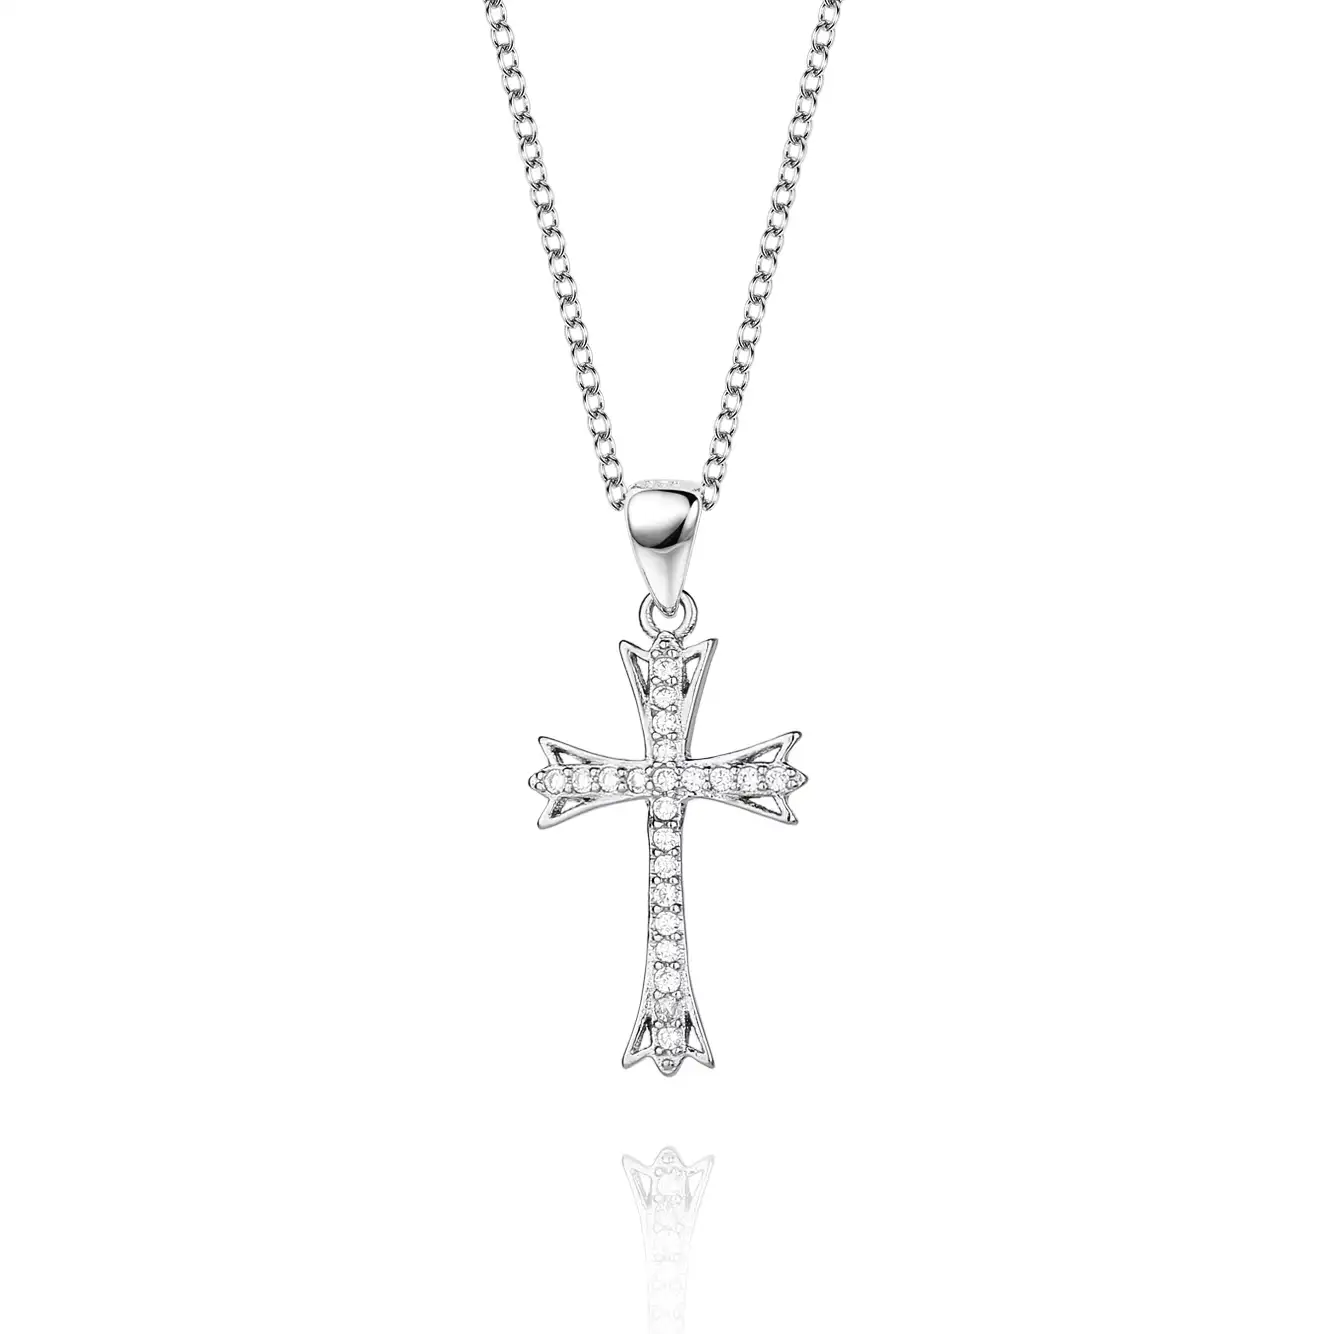 Cubic Zirconia Cross Pendant Necklace 80200025